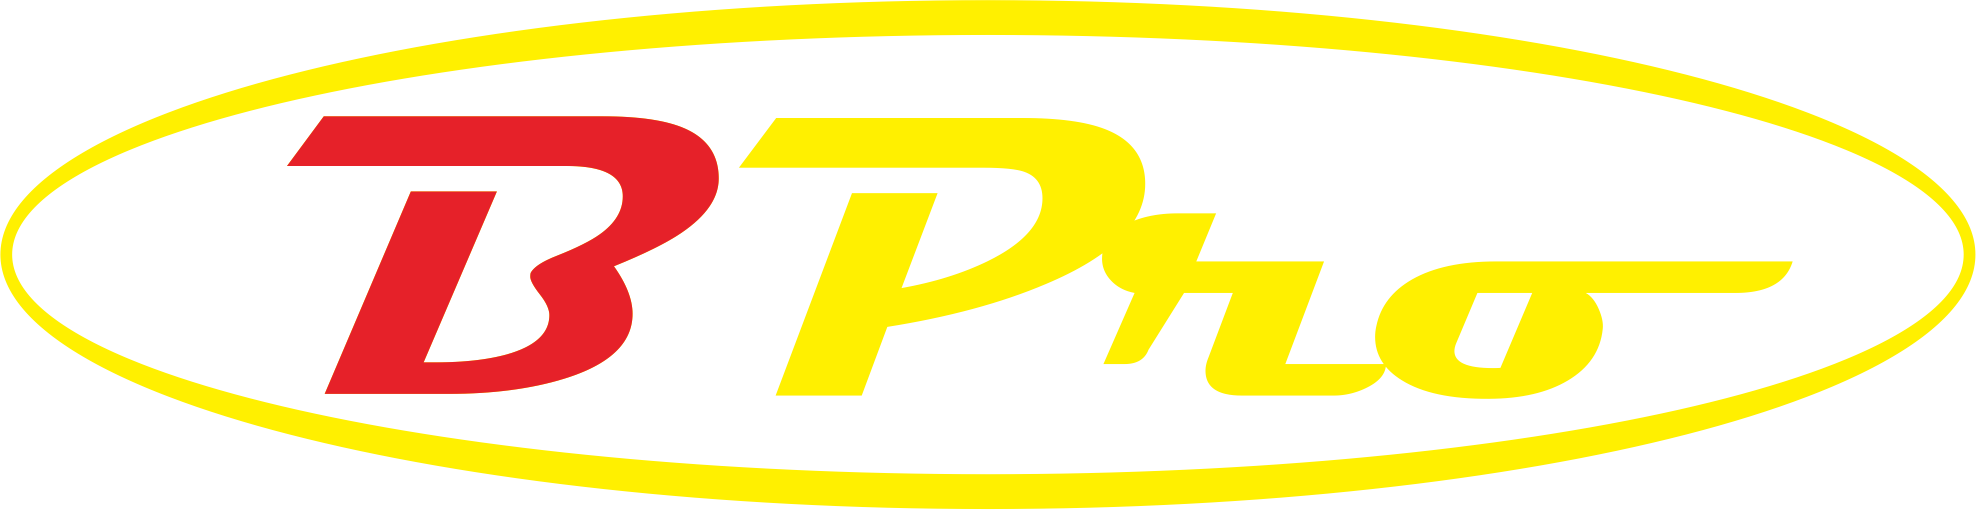 Logo Ama Pro Racing PNG - 105369